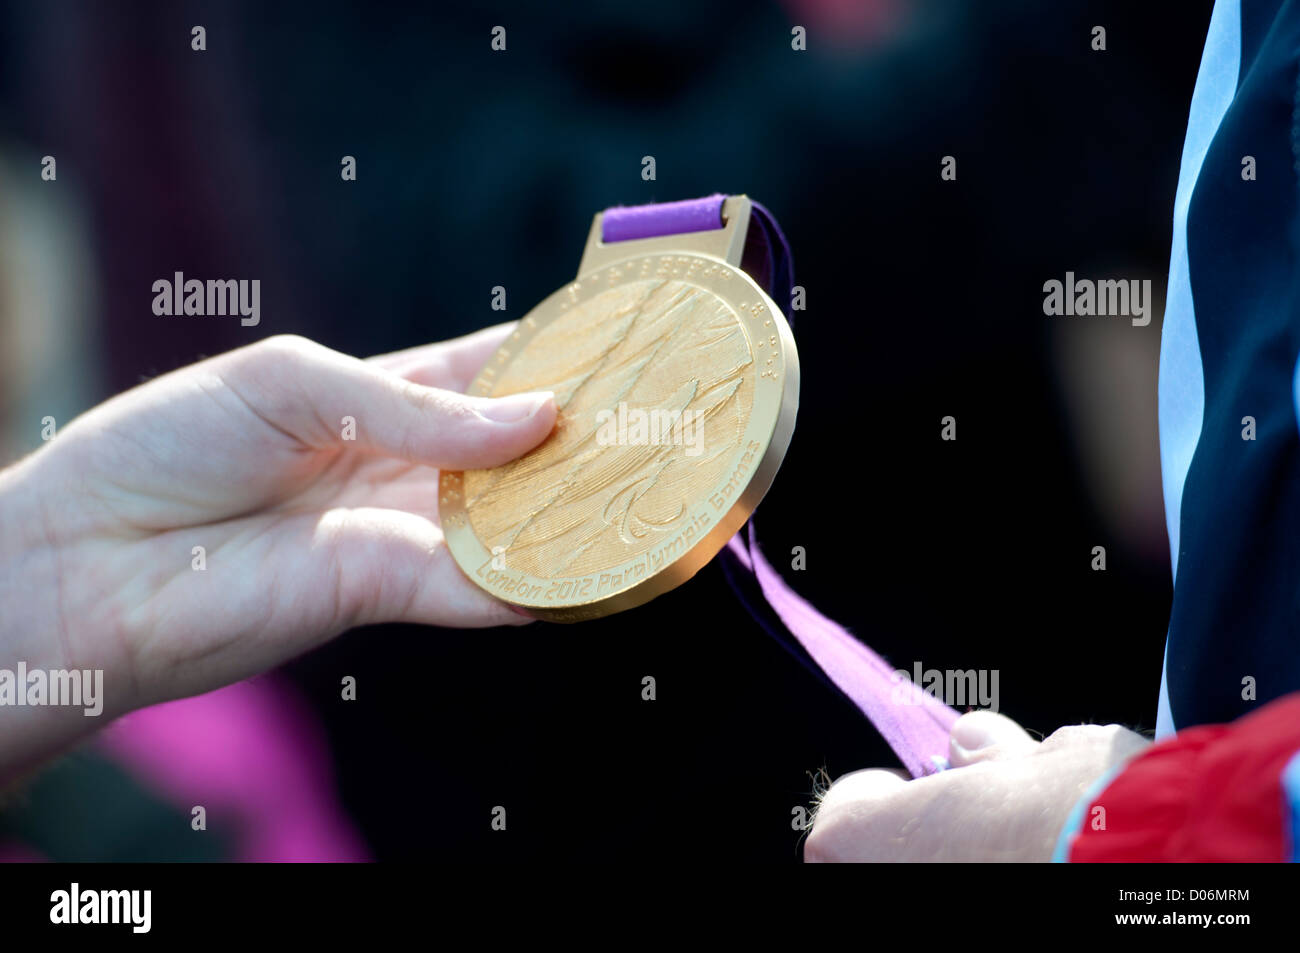 2012 London Paralympics gold medal Stock Photo